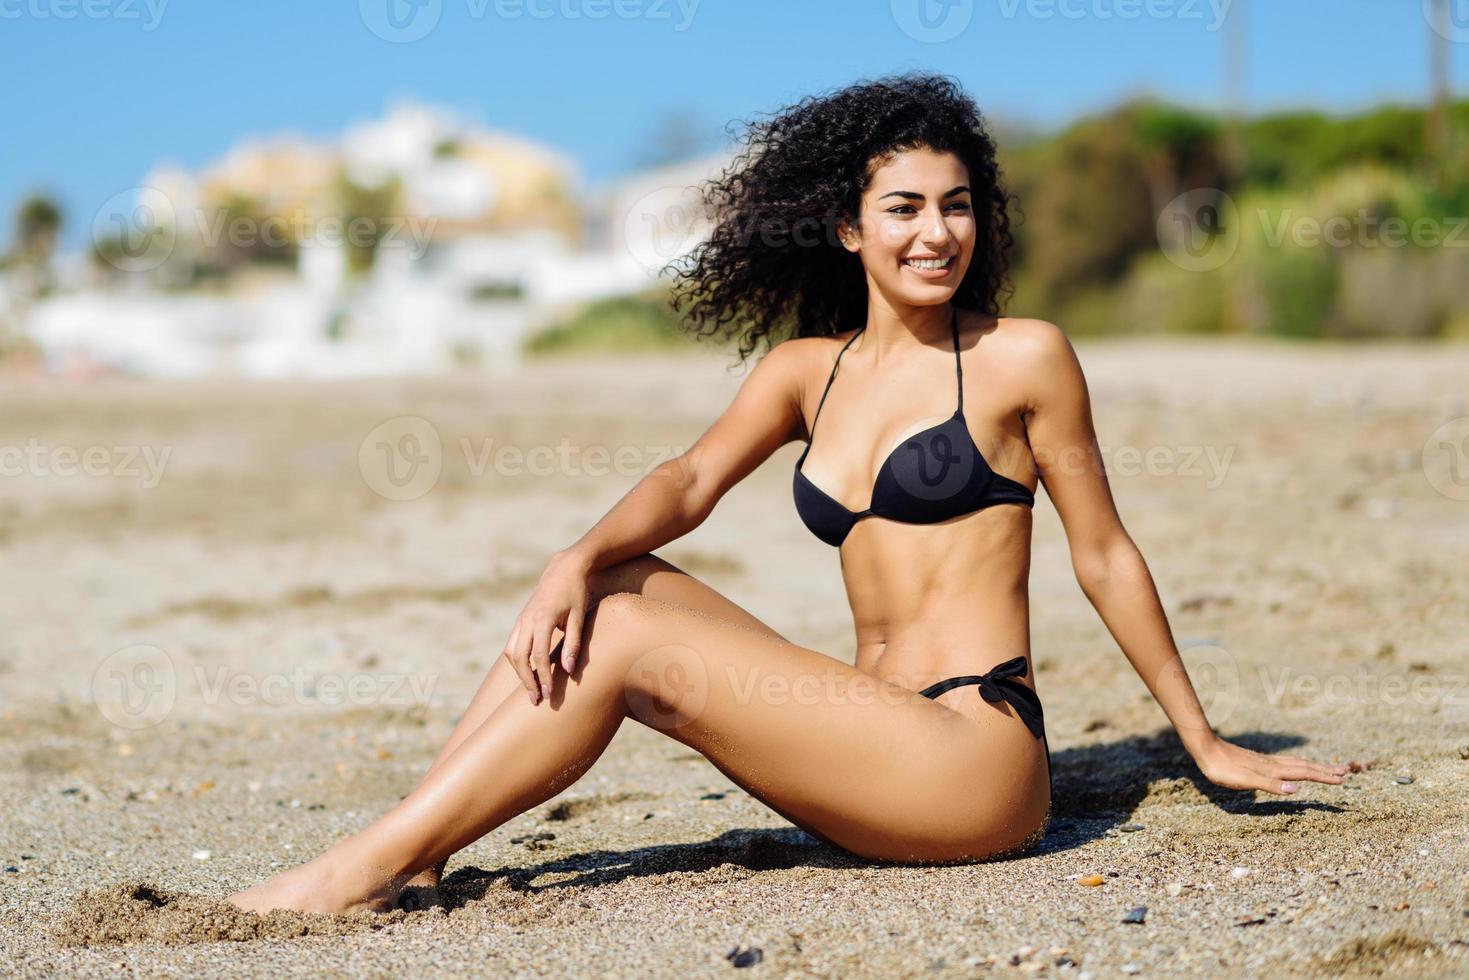 arabisk kvinna med vacker kropp i bikini som ligger på strandsanden foto